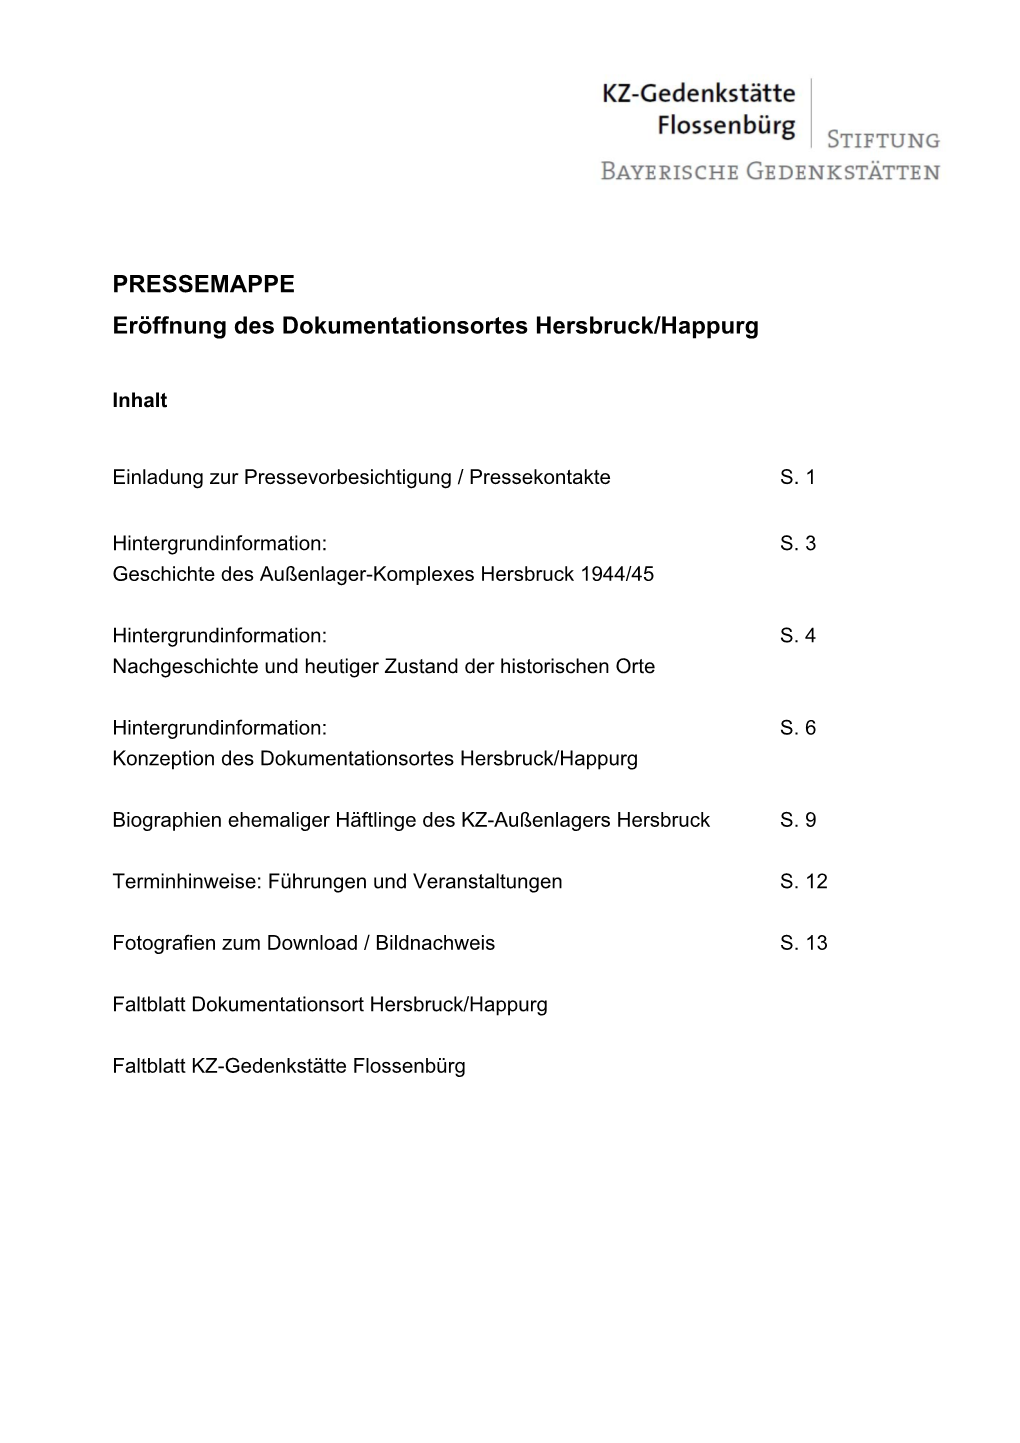 Pressemappe Dokumentationsort Herbruck/Happurg